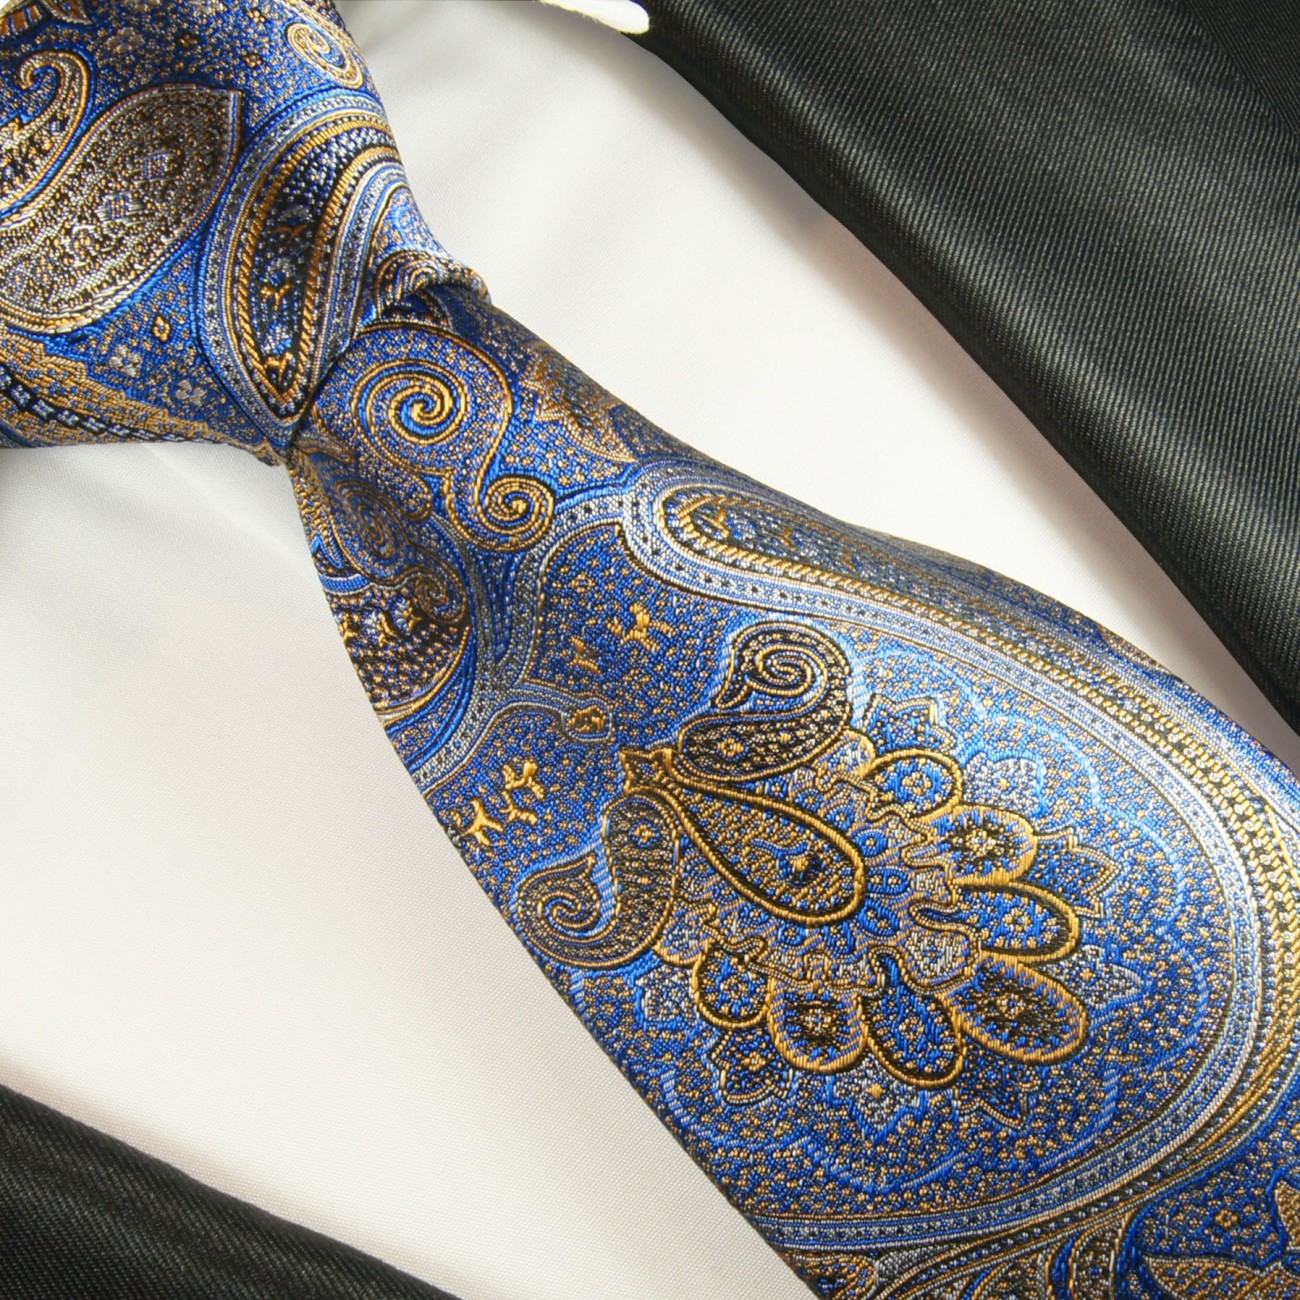 Krawatte blau gold paisley brokat 2094